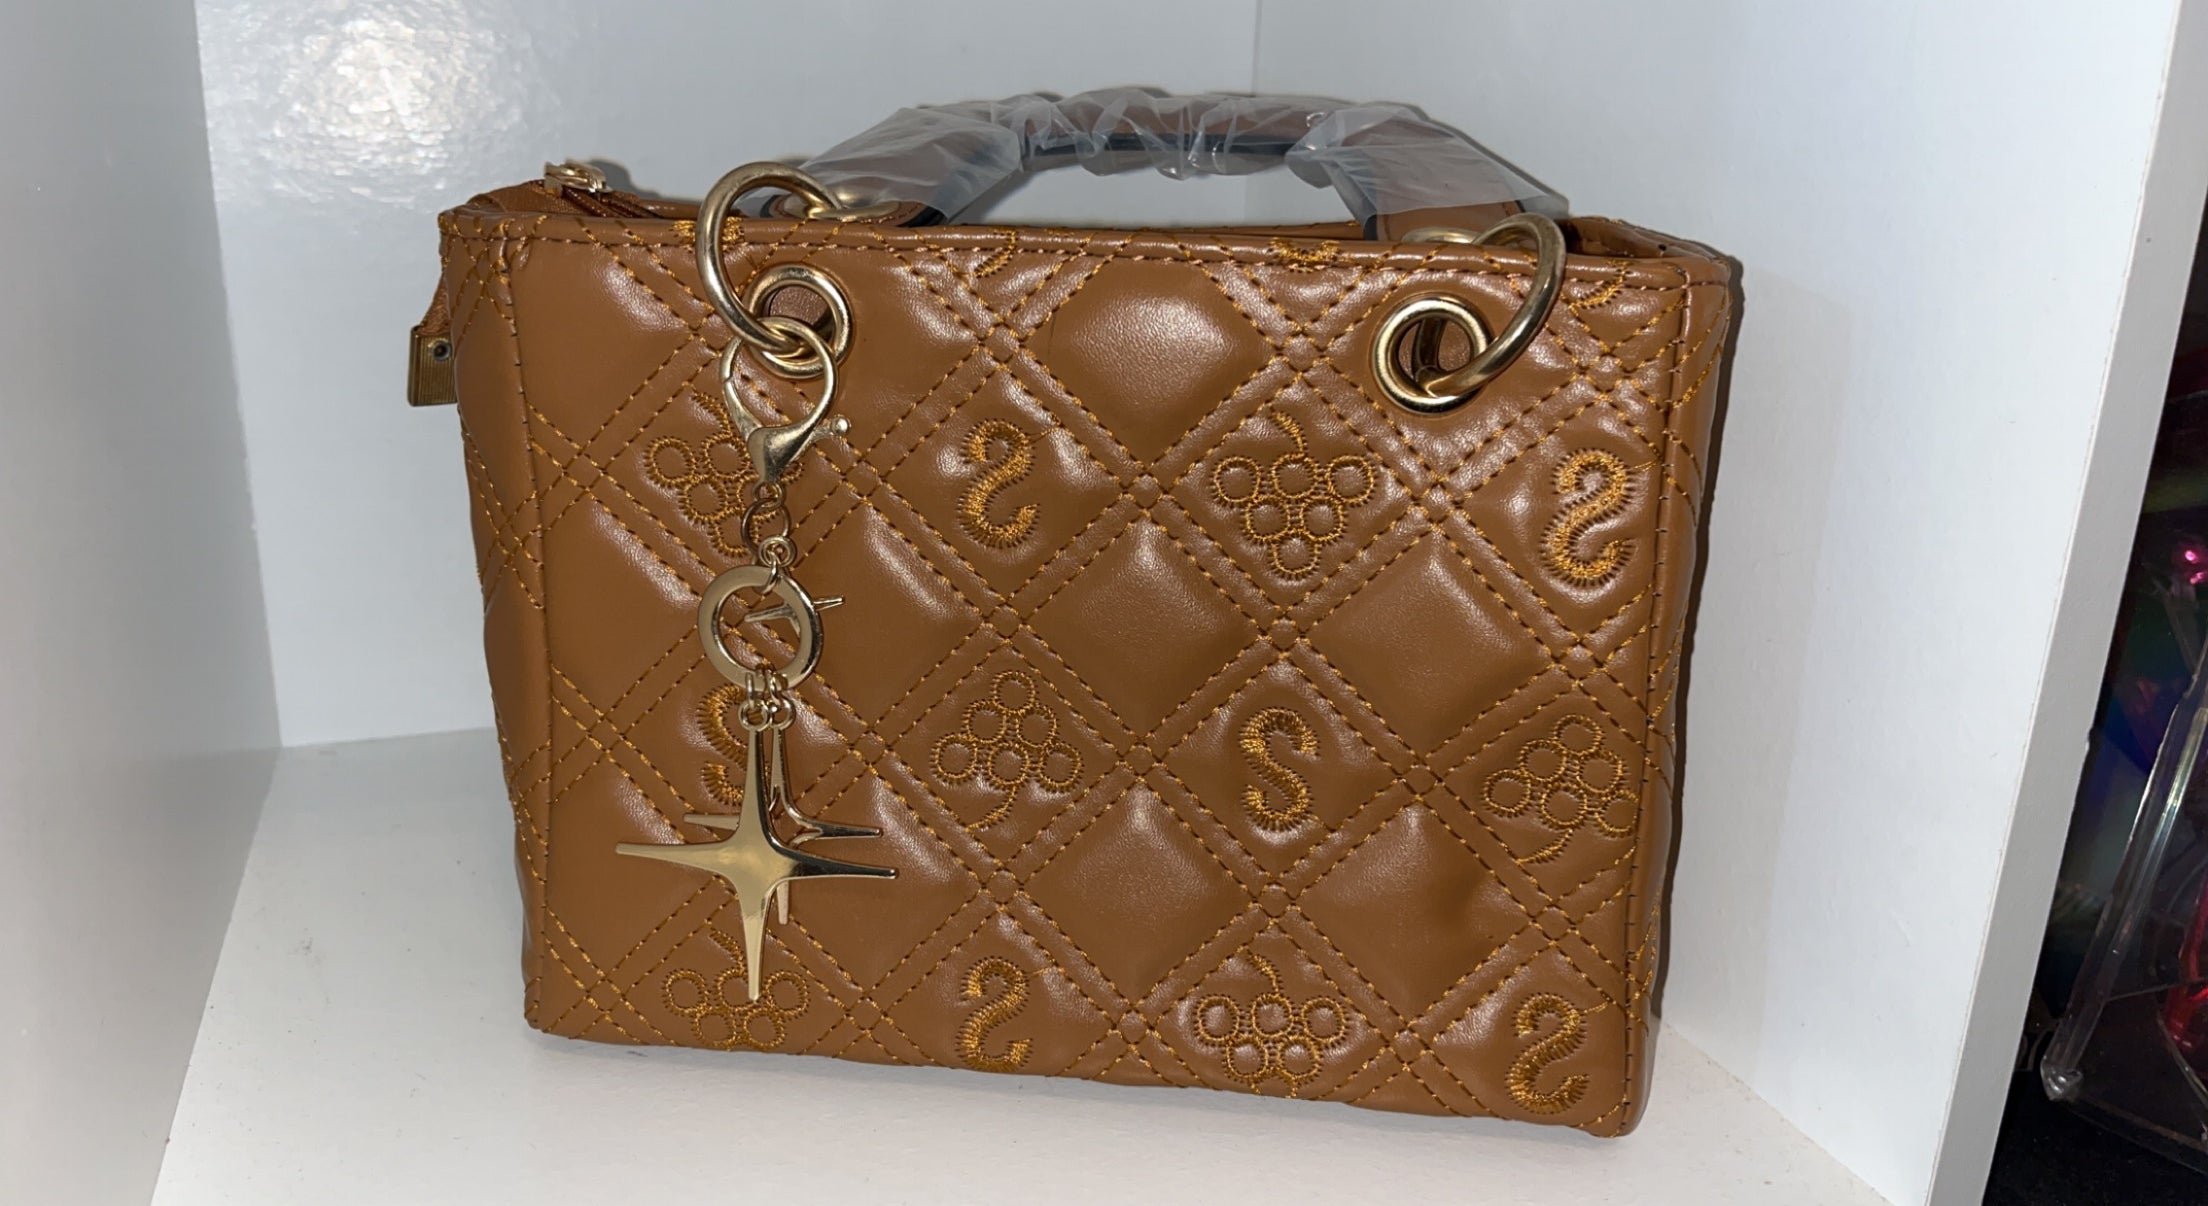 Foxy brown handbag